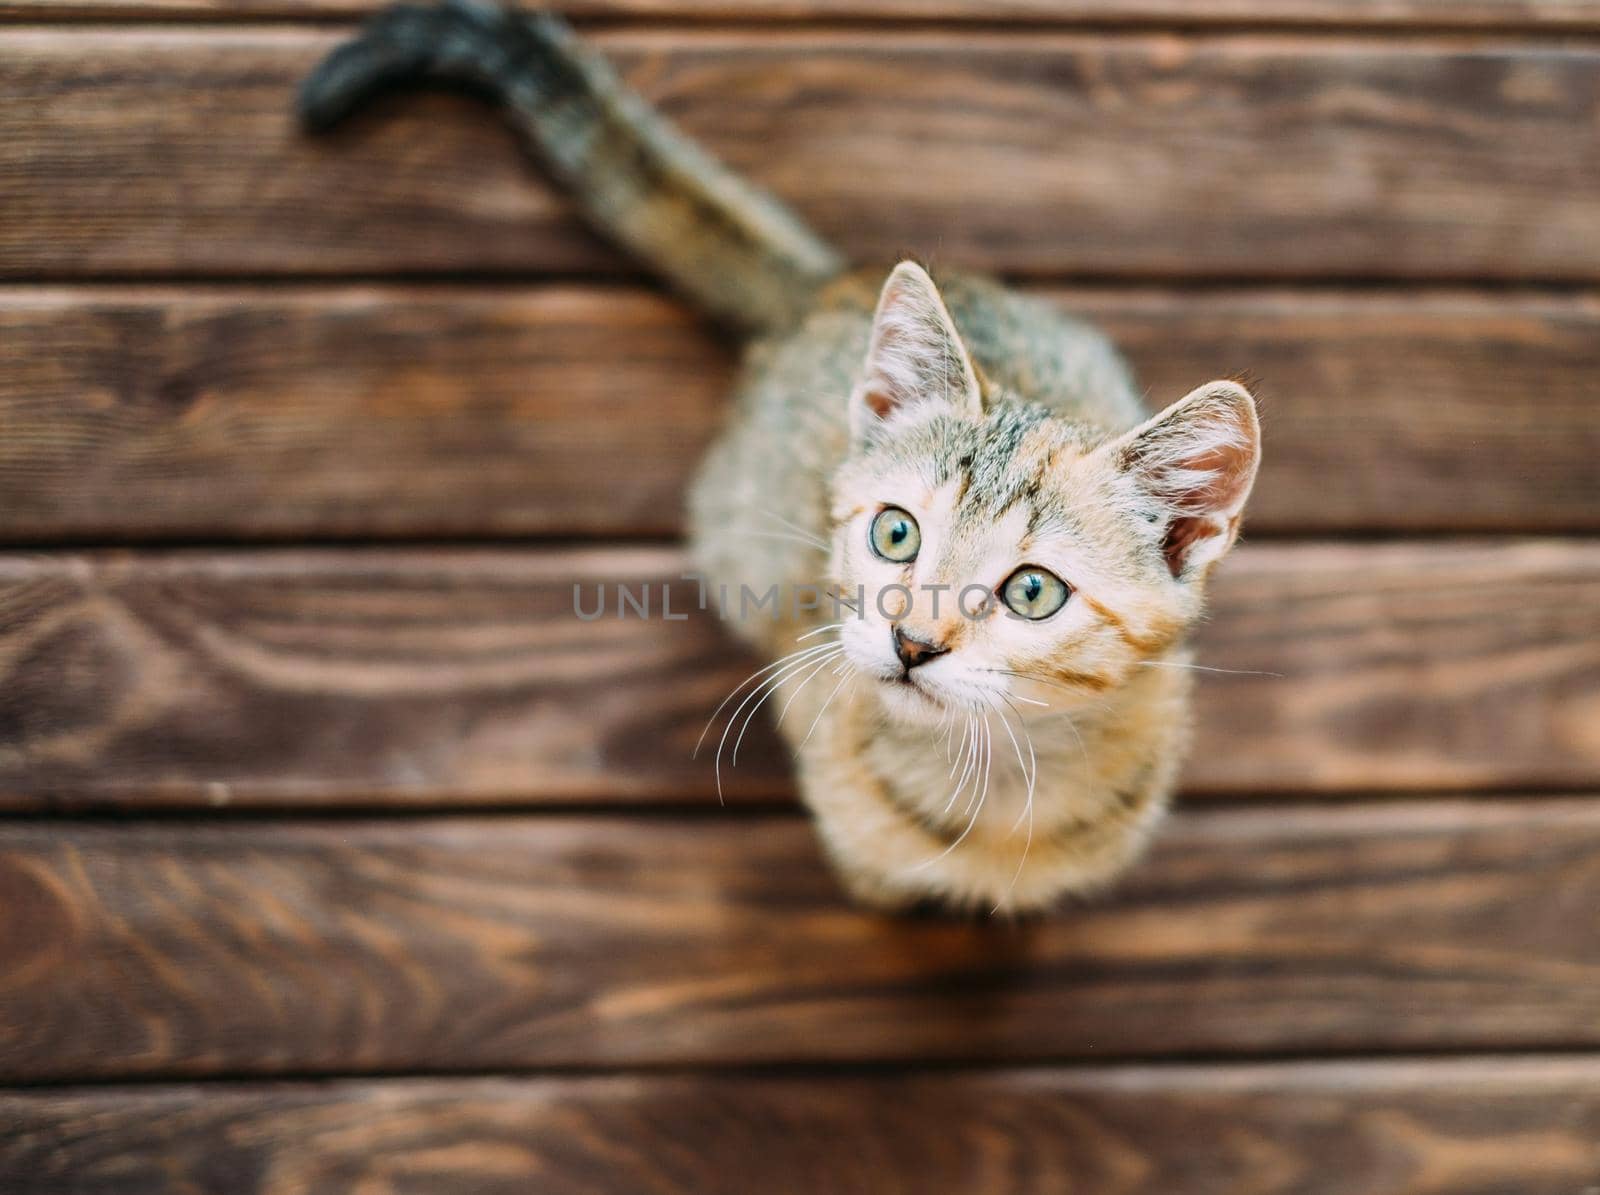 Curiosity kitten sitting on wooden floor and staring up.